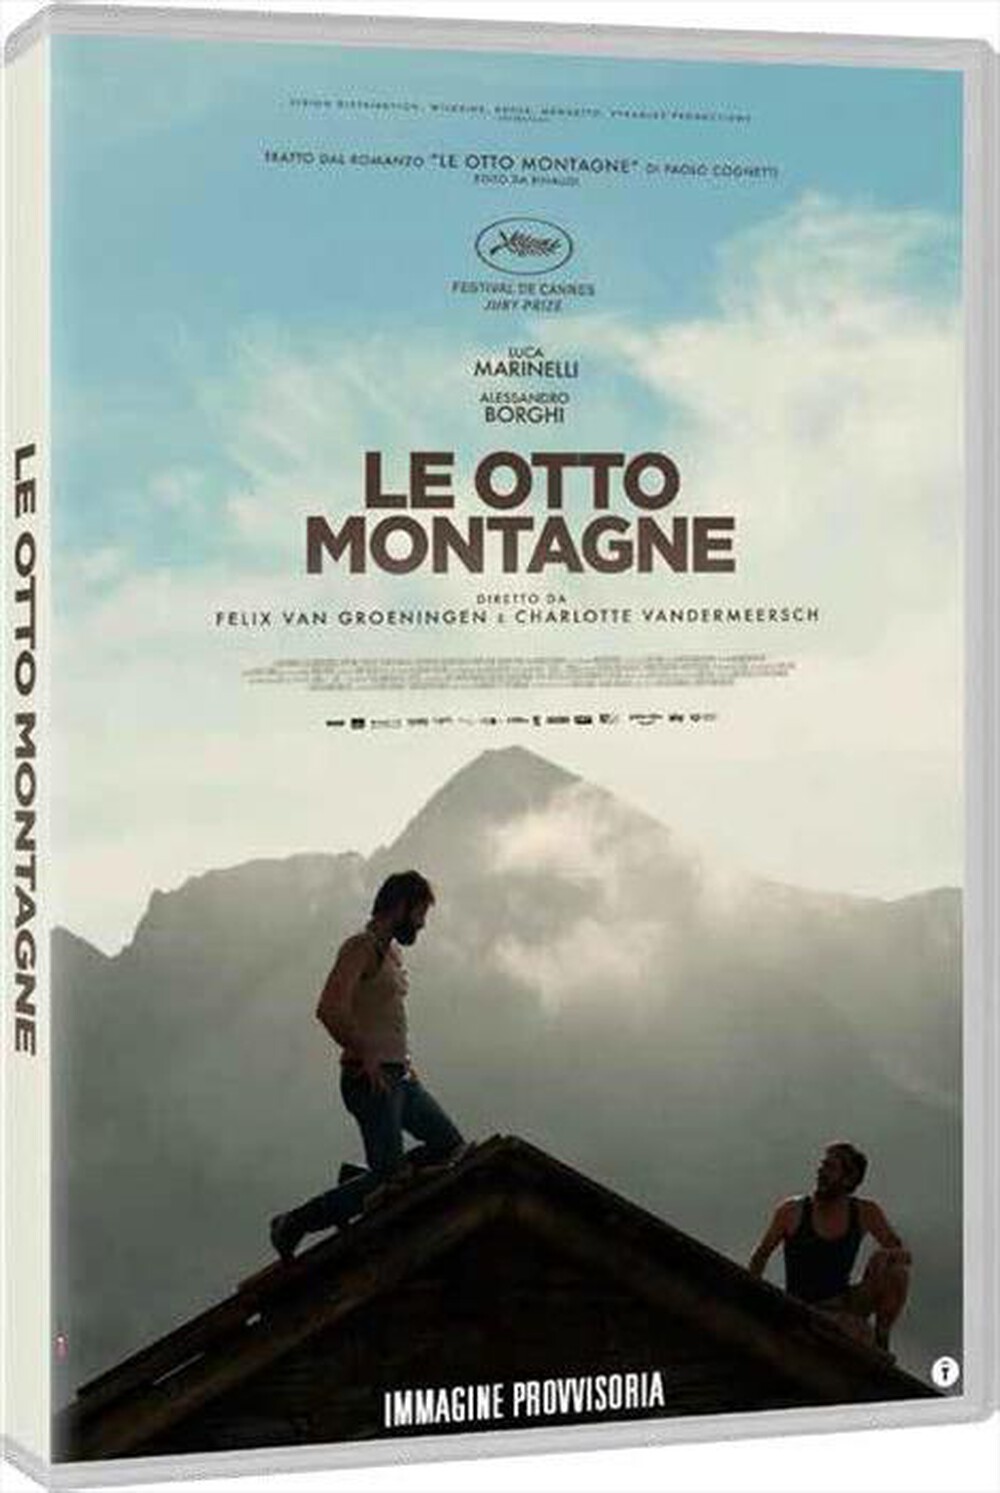 "Vision Distribution - Otto Montagne (Le)"